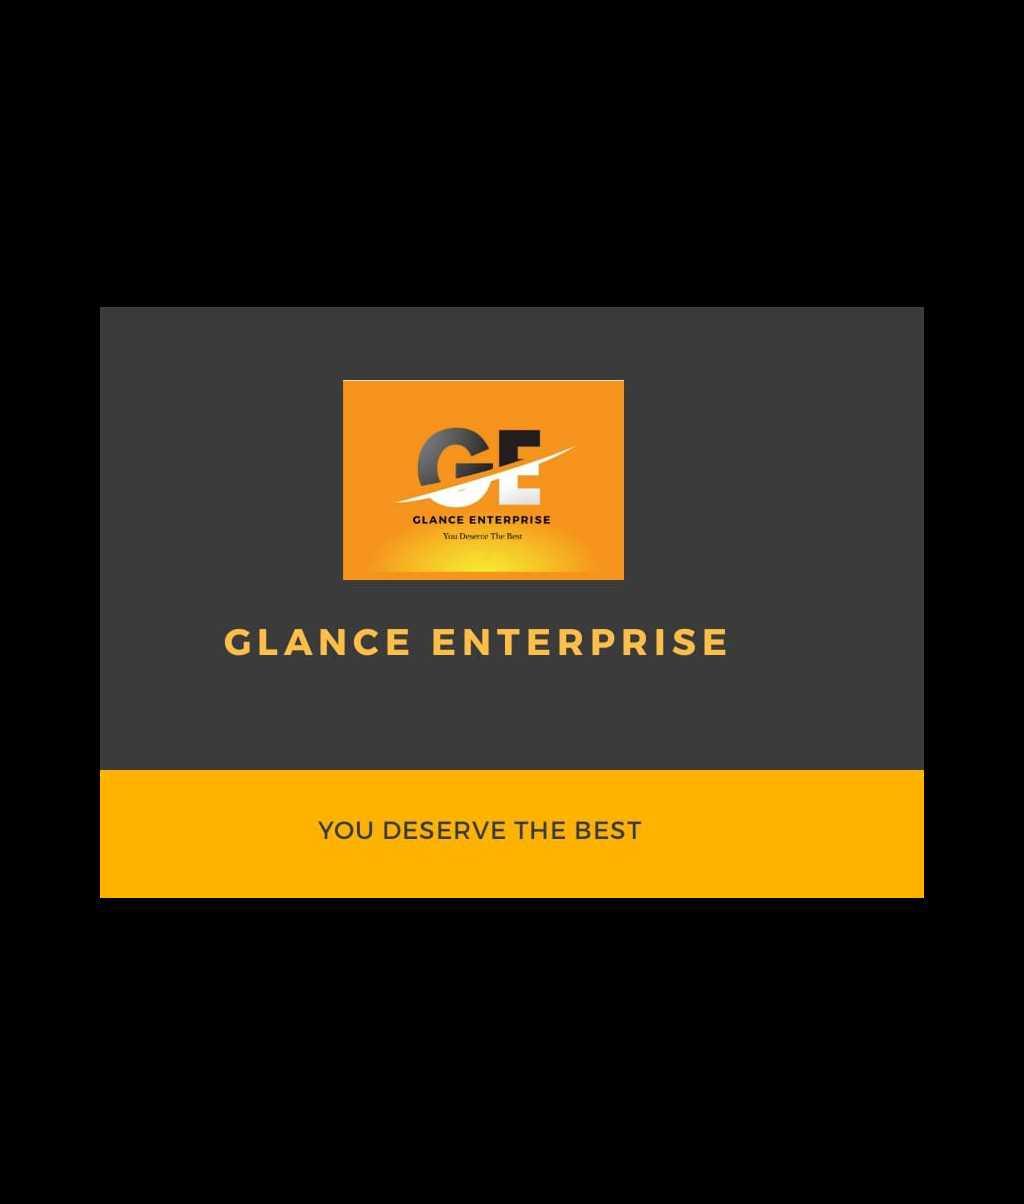 Glance Enterprise